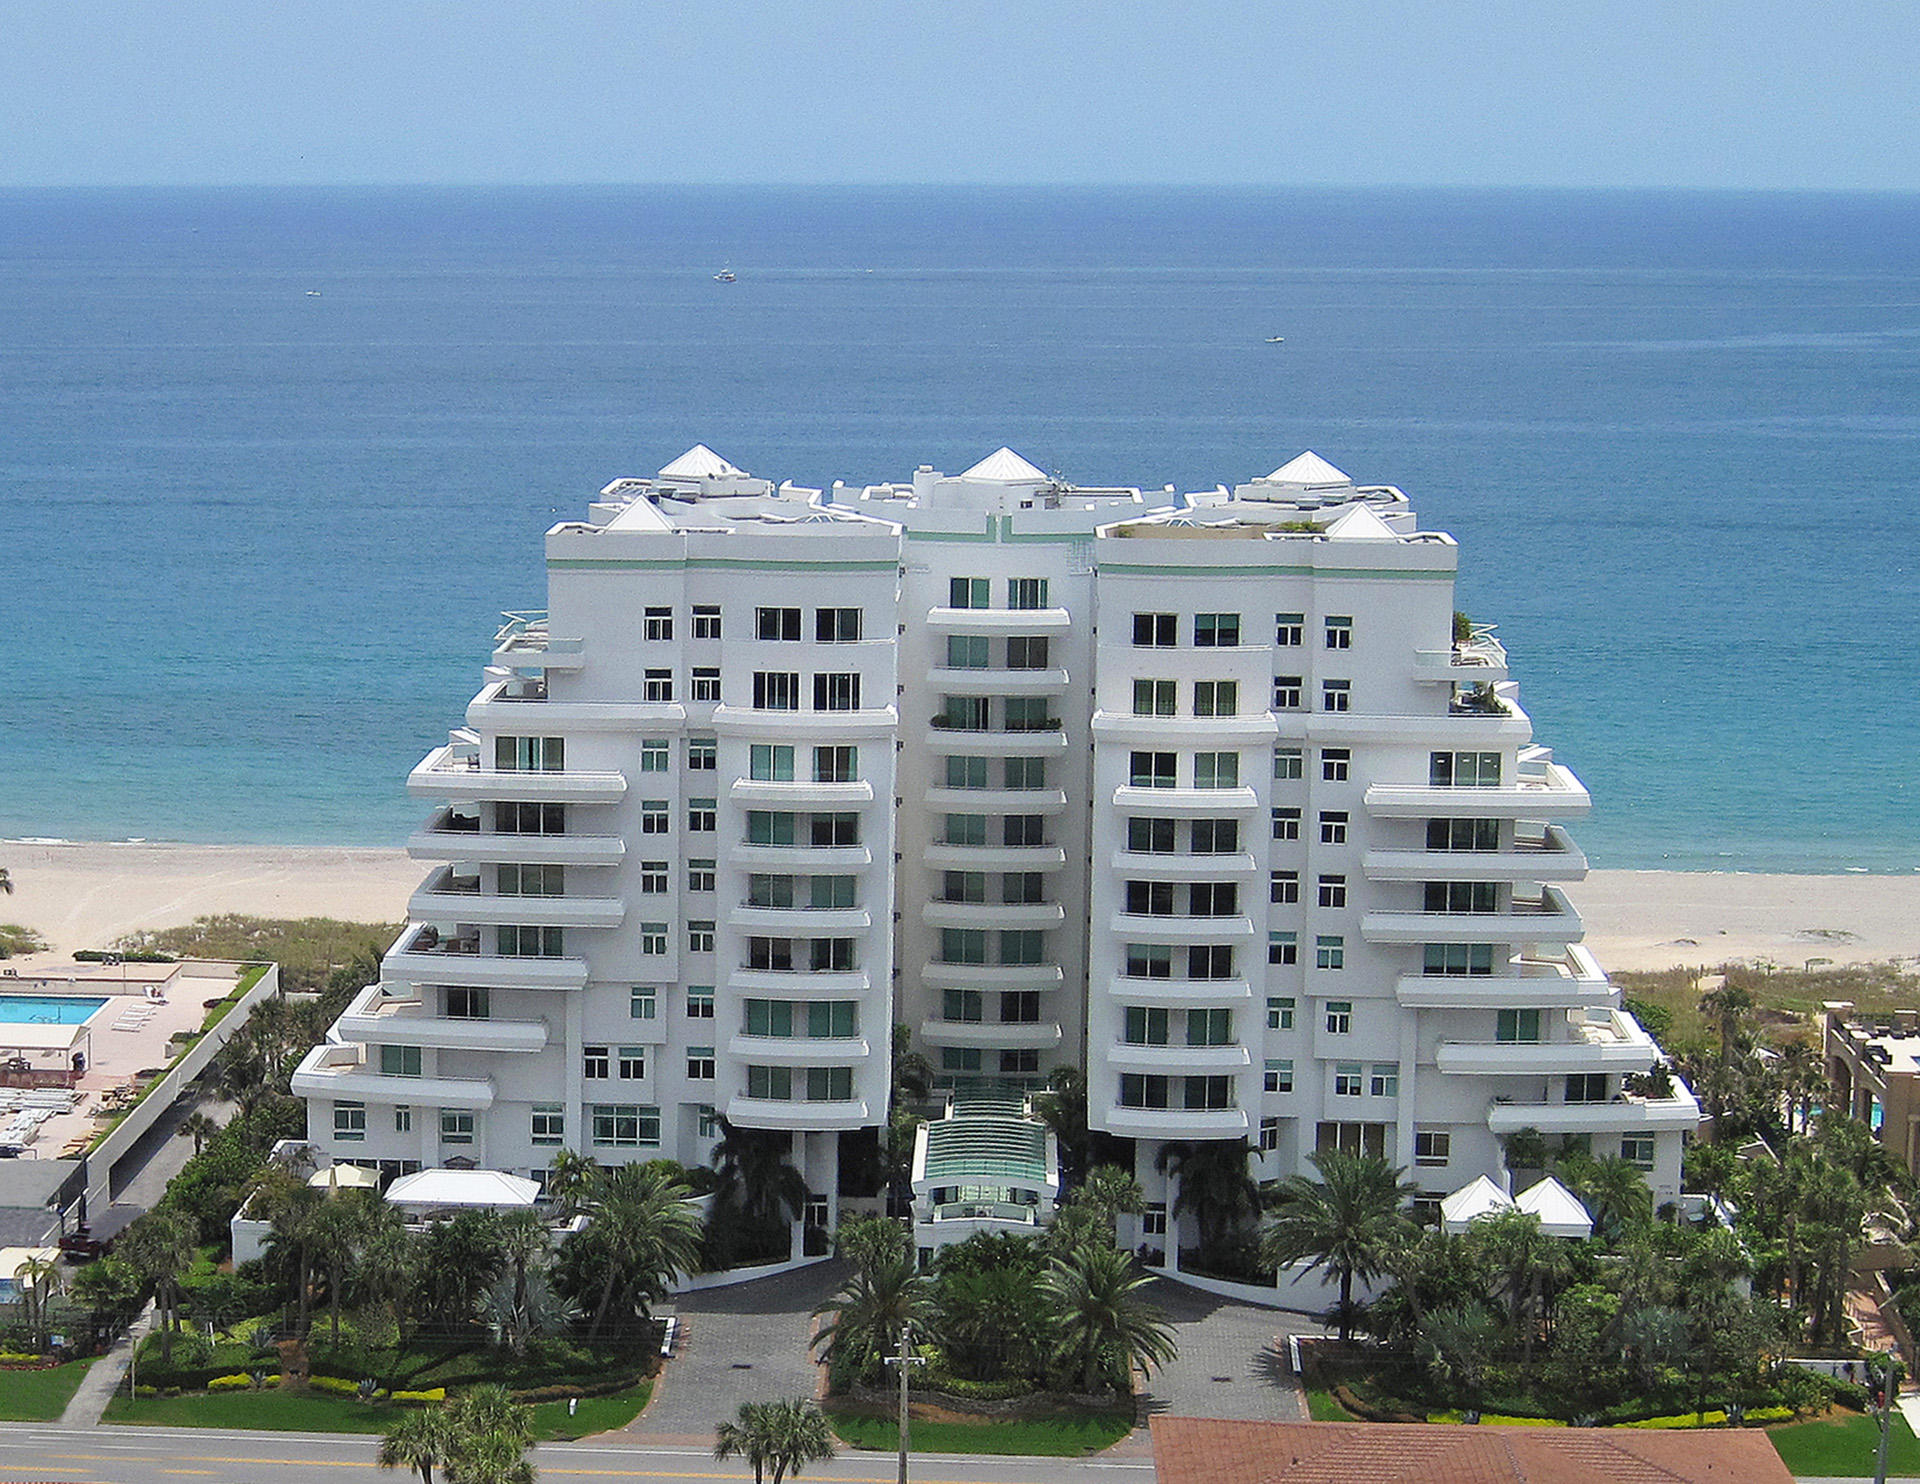 Property for Sale at 2494 S Ocean Boulevard J-7, Boca Raton, Palm Beach County, Florida - Bedrooms: 3 
Bathrooms: 3  - $4,295,000